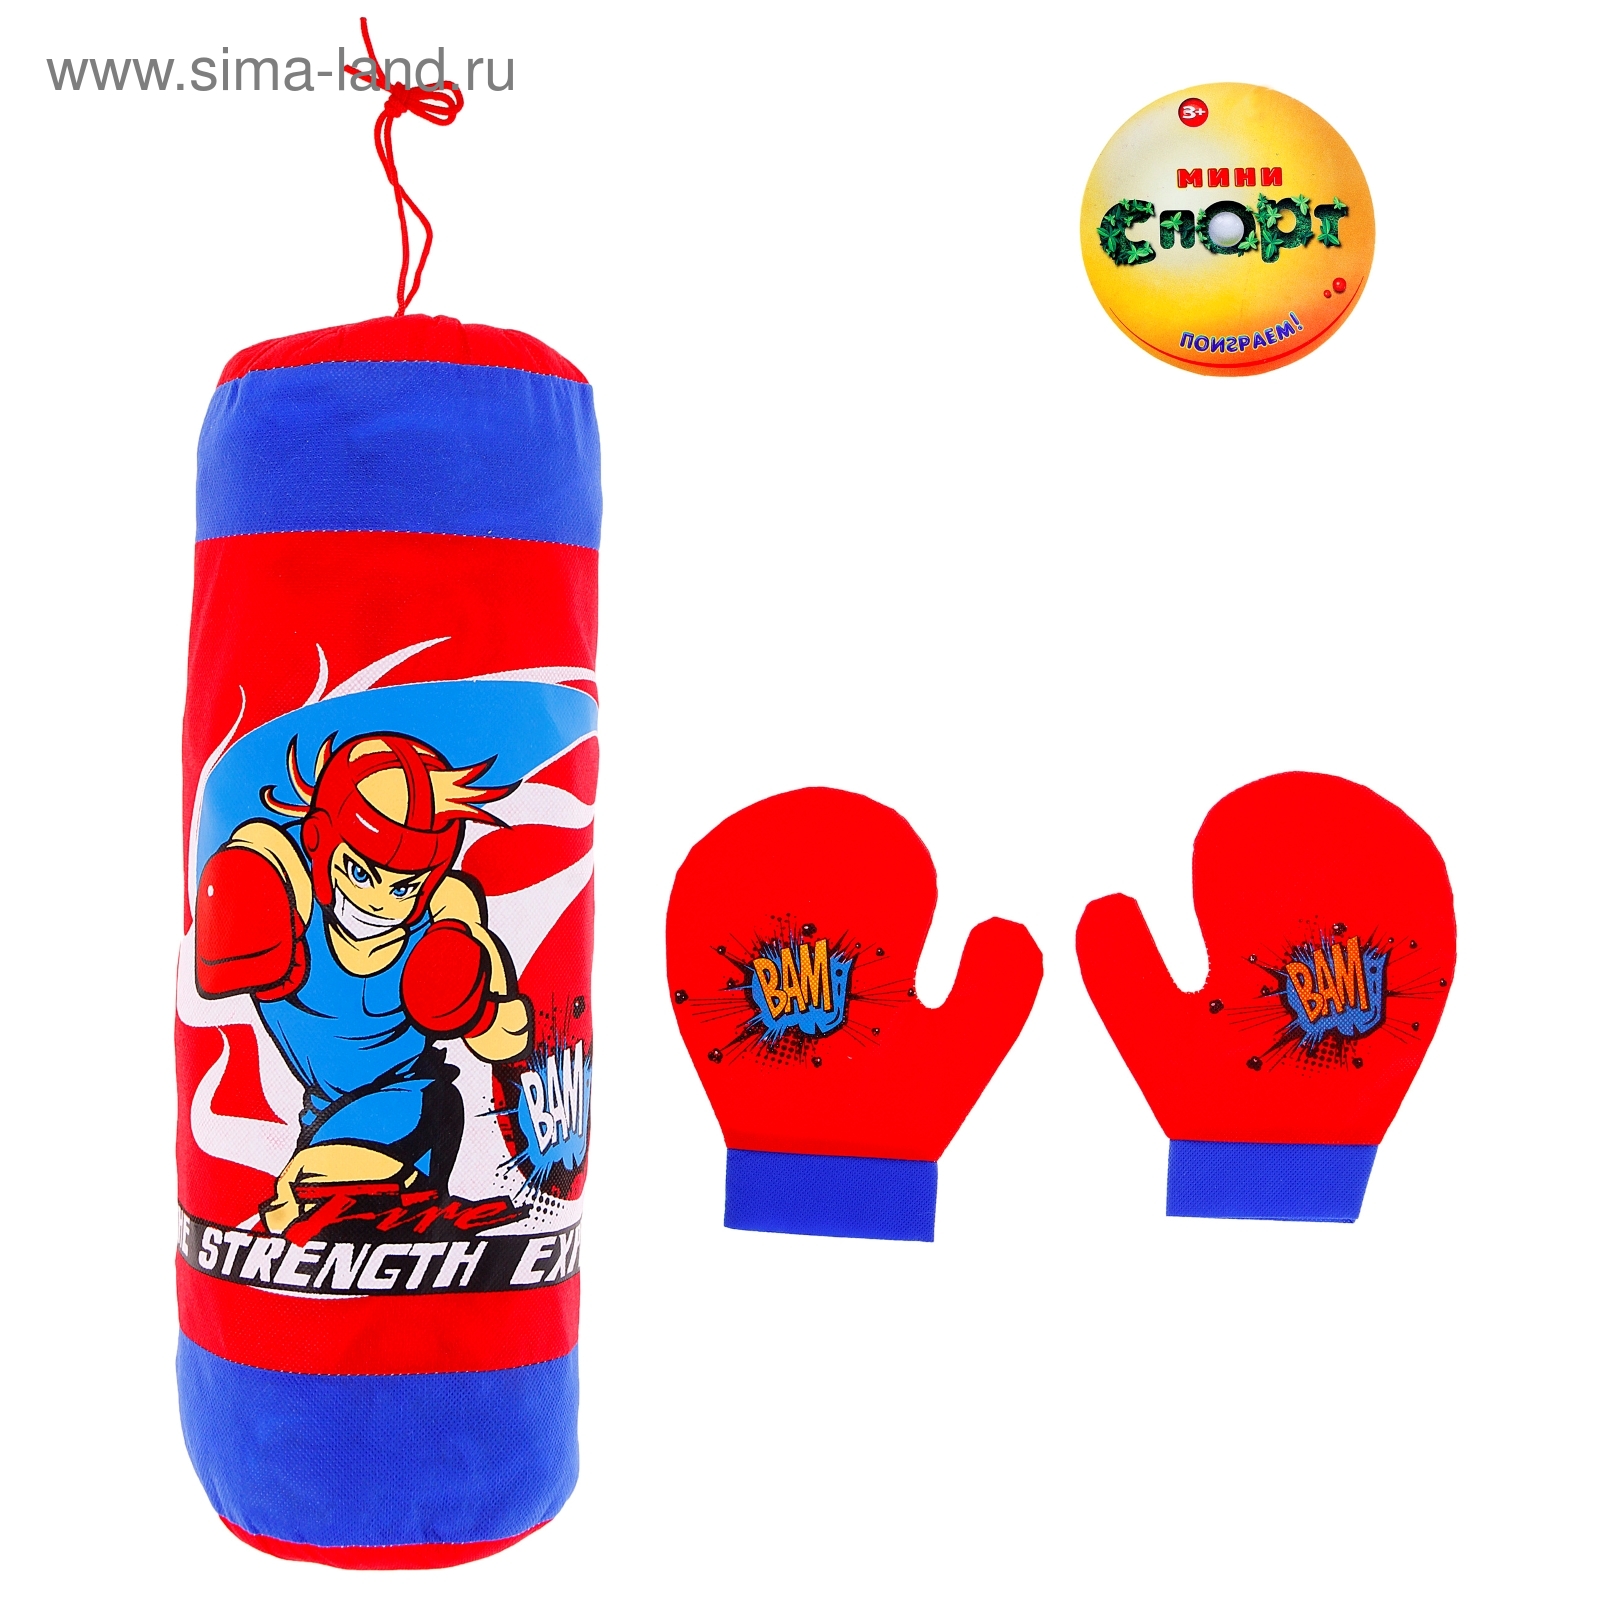 Набор для бокса: груша, 2 перчатки, цвета МИКС